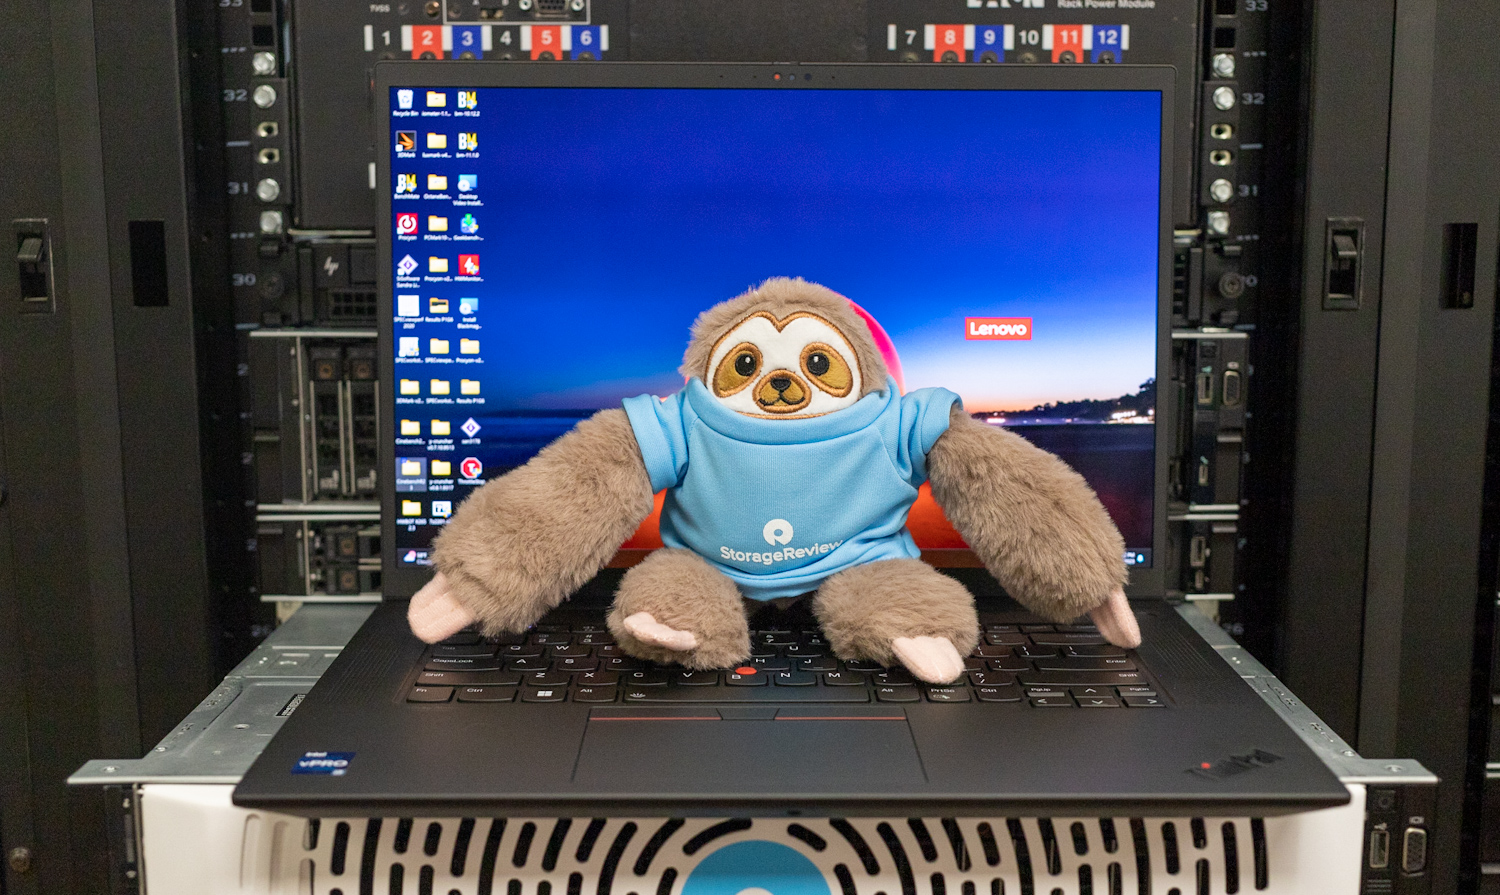 Lenovo ThinkPad P1 Gen 6 with sloth